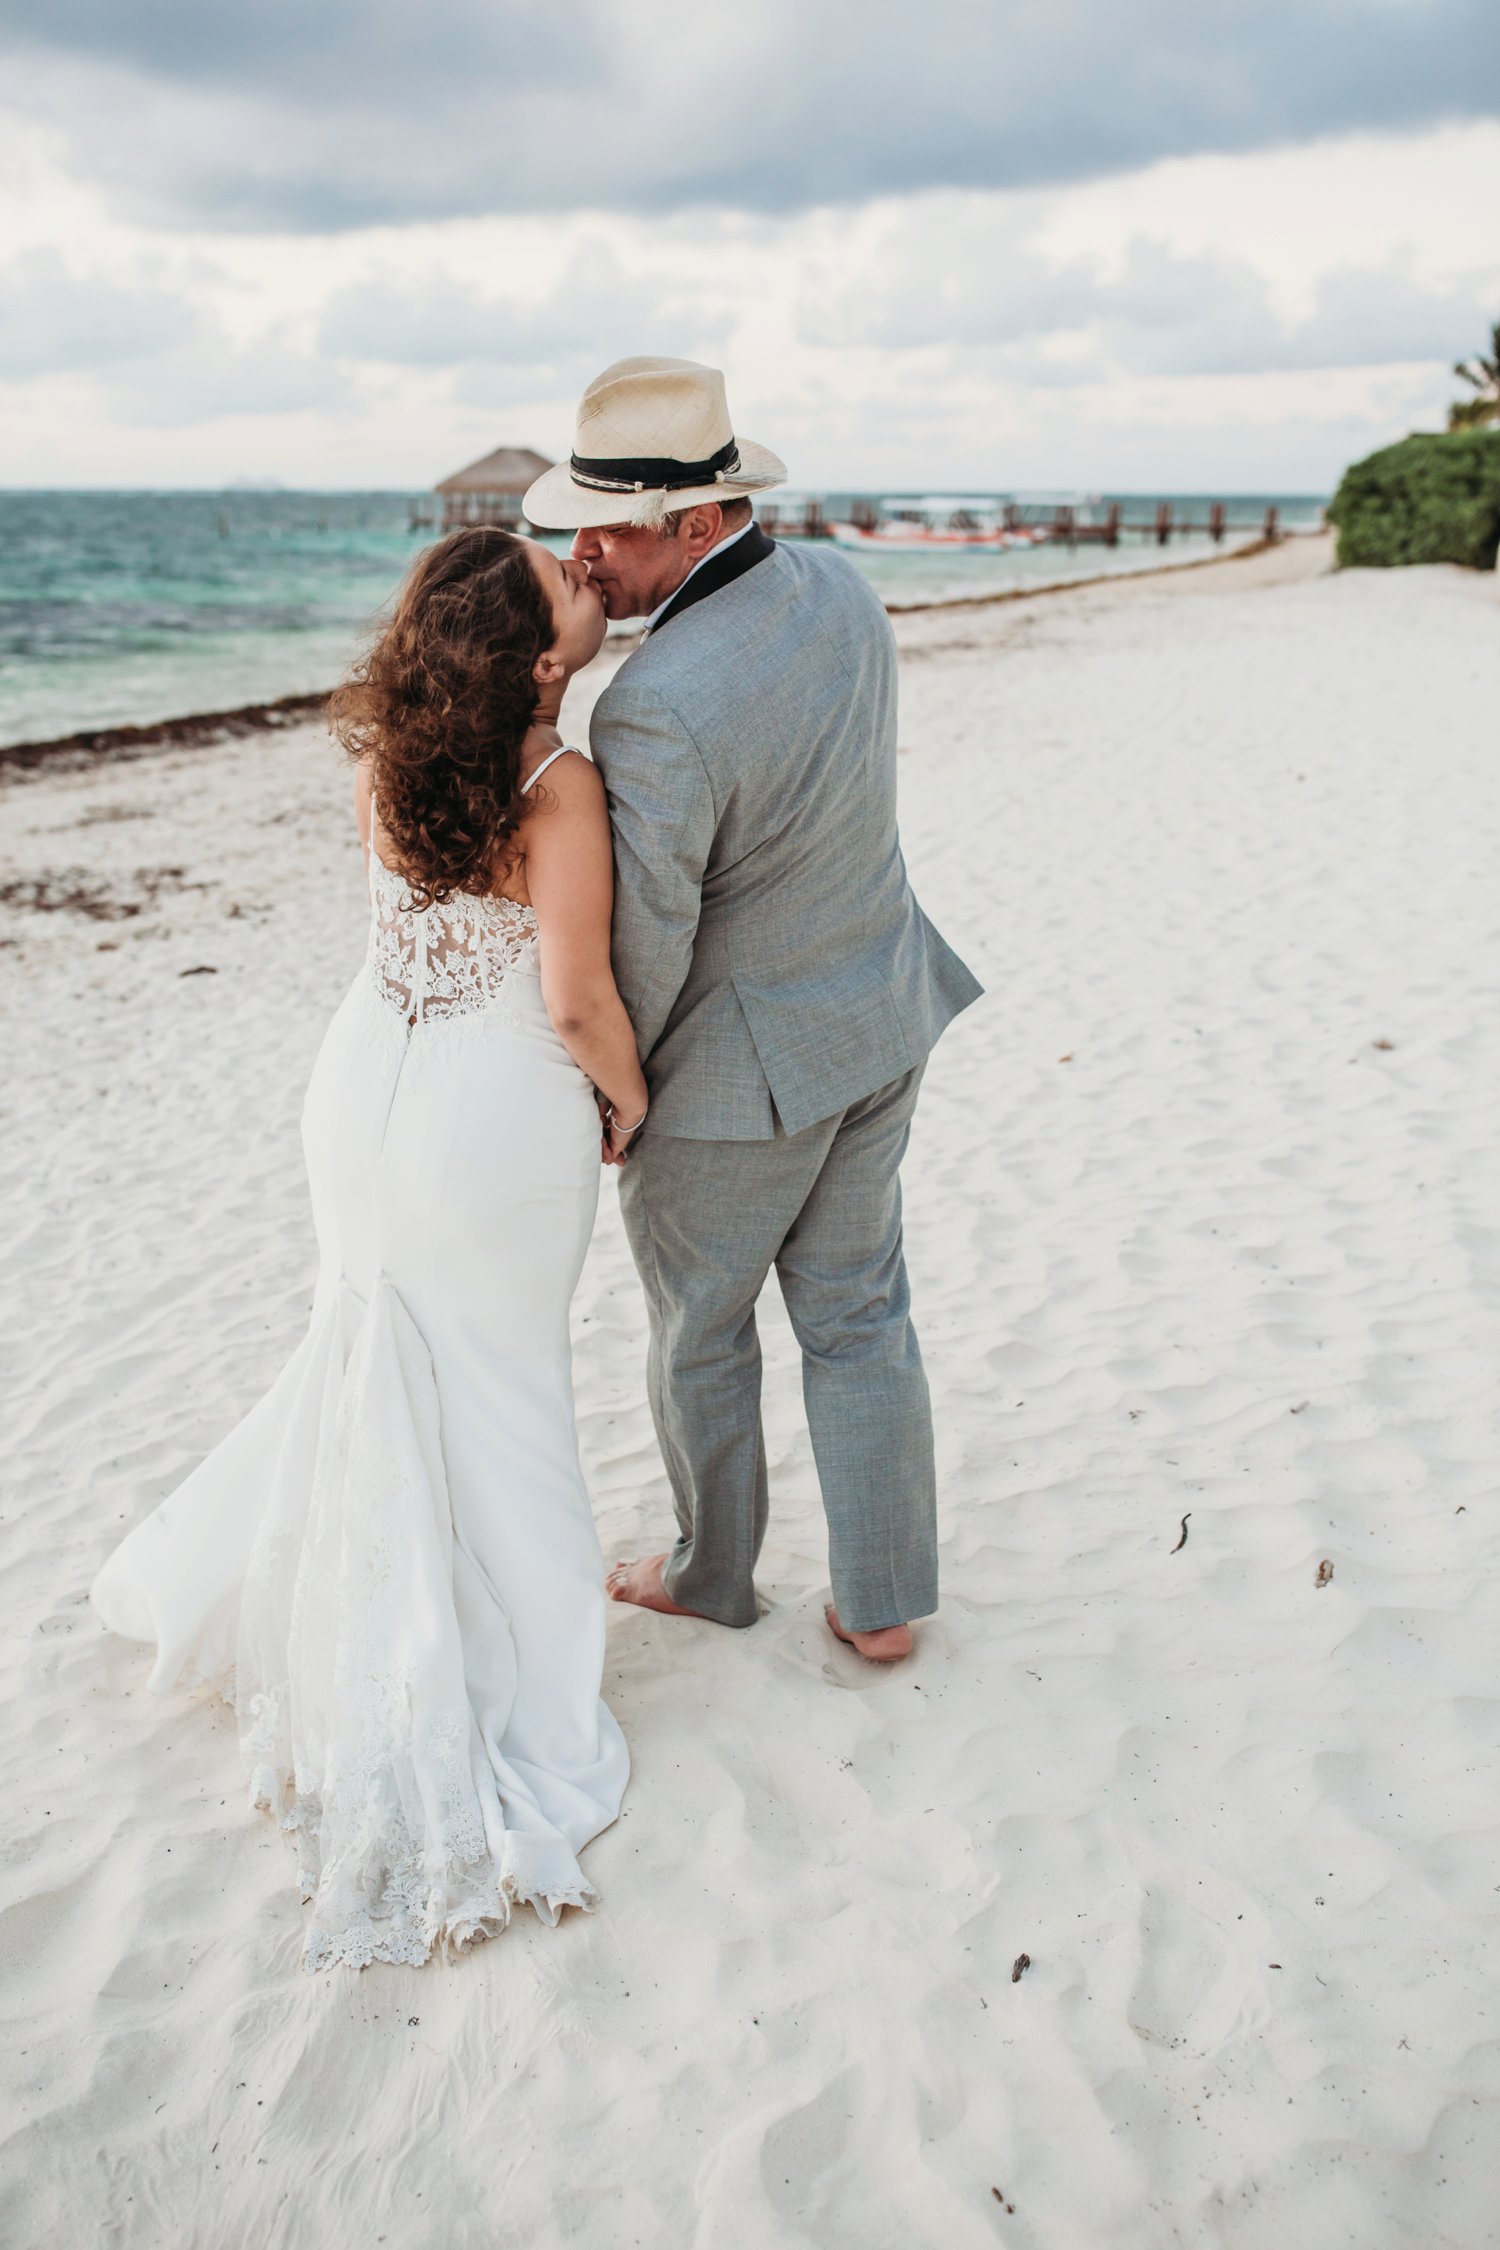  images by feliciathephotographer.com | destination wedding photographer | mexico | tropical | fiji | venue | azul beach resort | riviera maya | sunrise picture | bridal portraits | palm trees | romantic | kiss | walking by the ocean | 